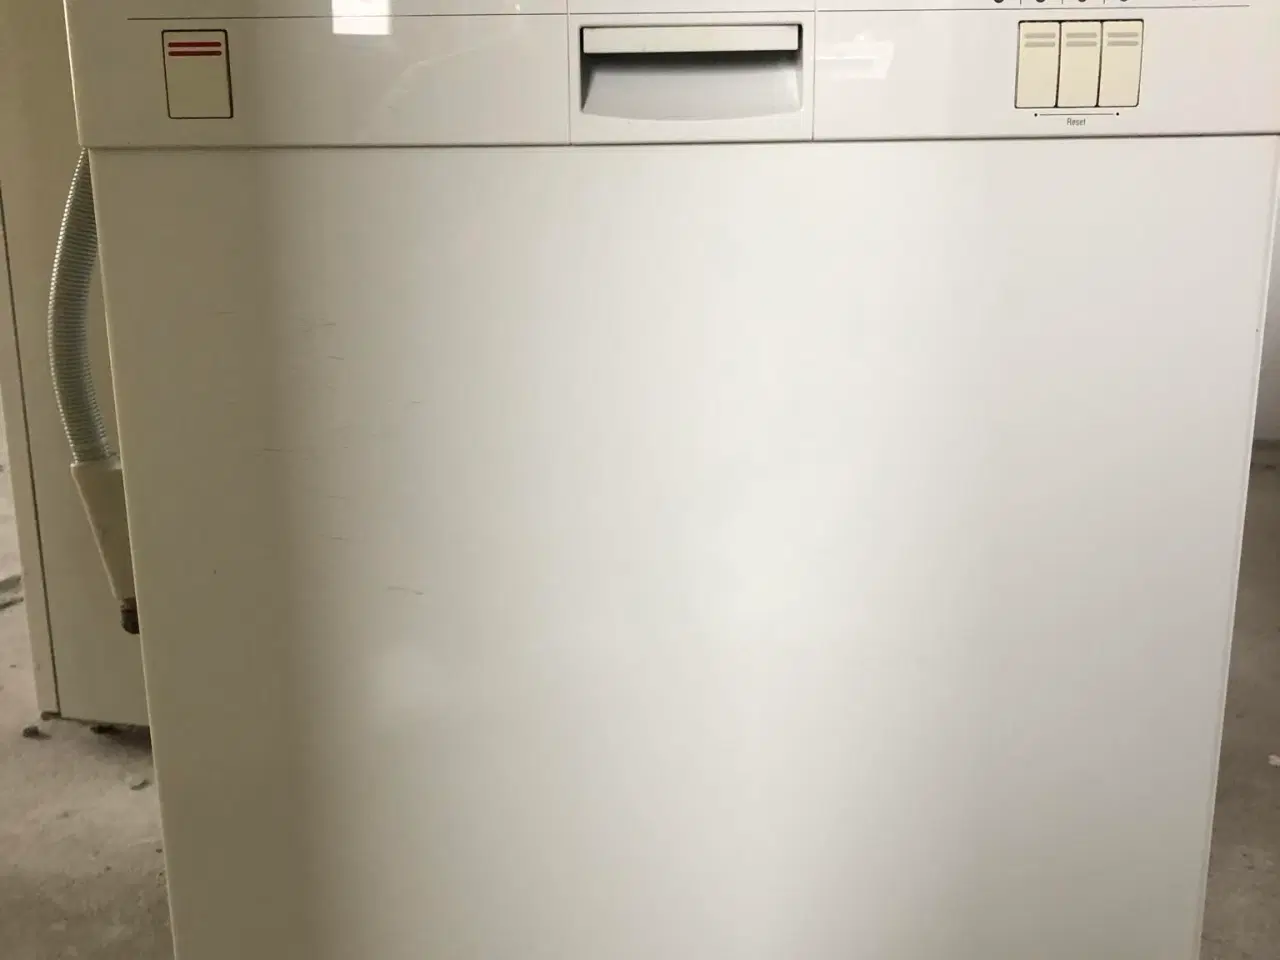 Billede 1 - Bosch opvaskemaskine 